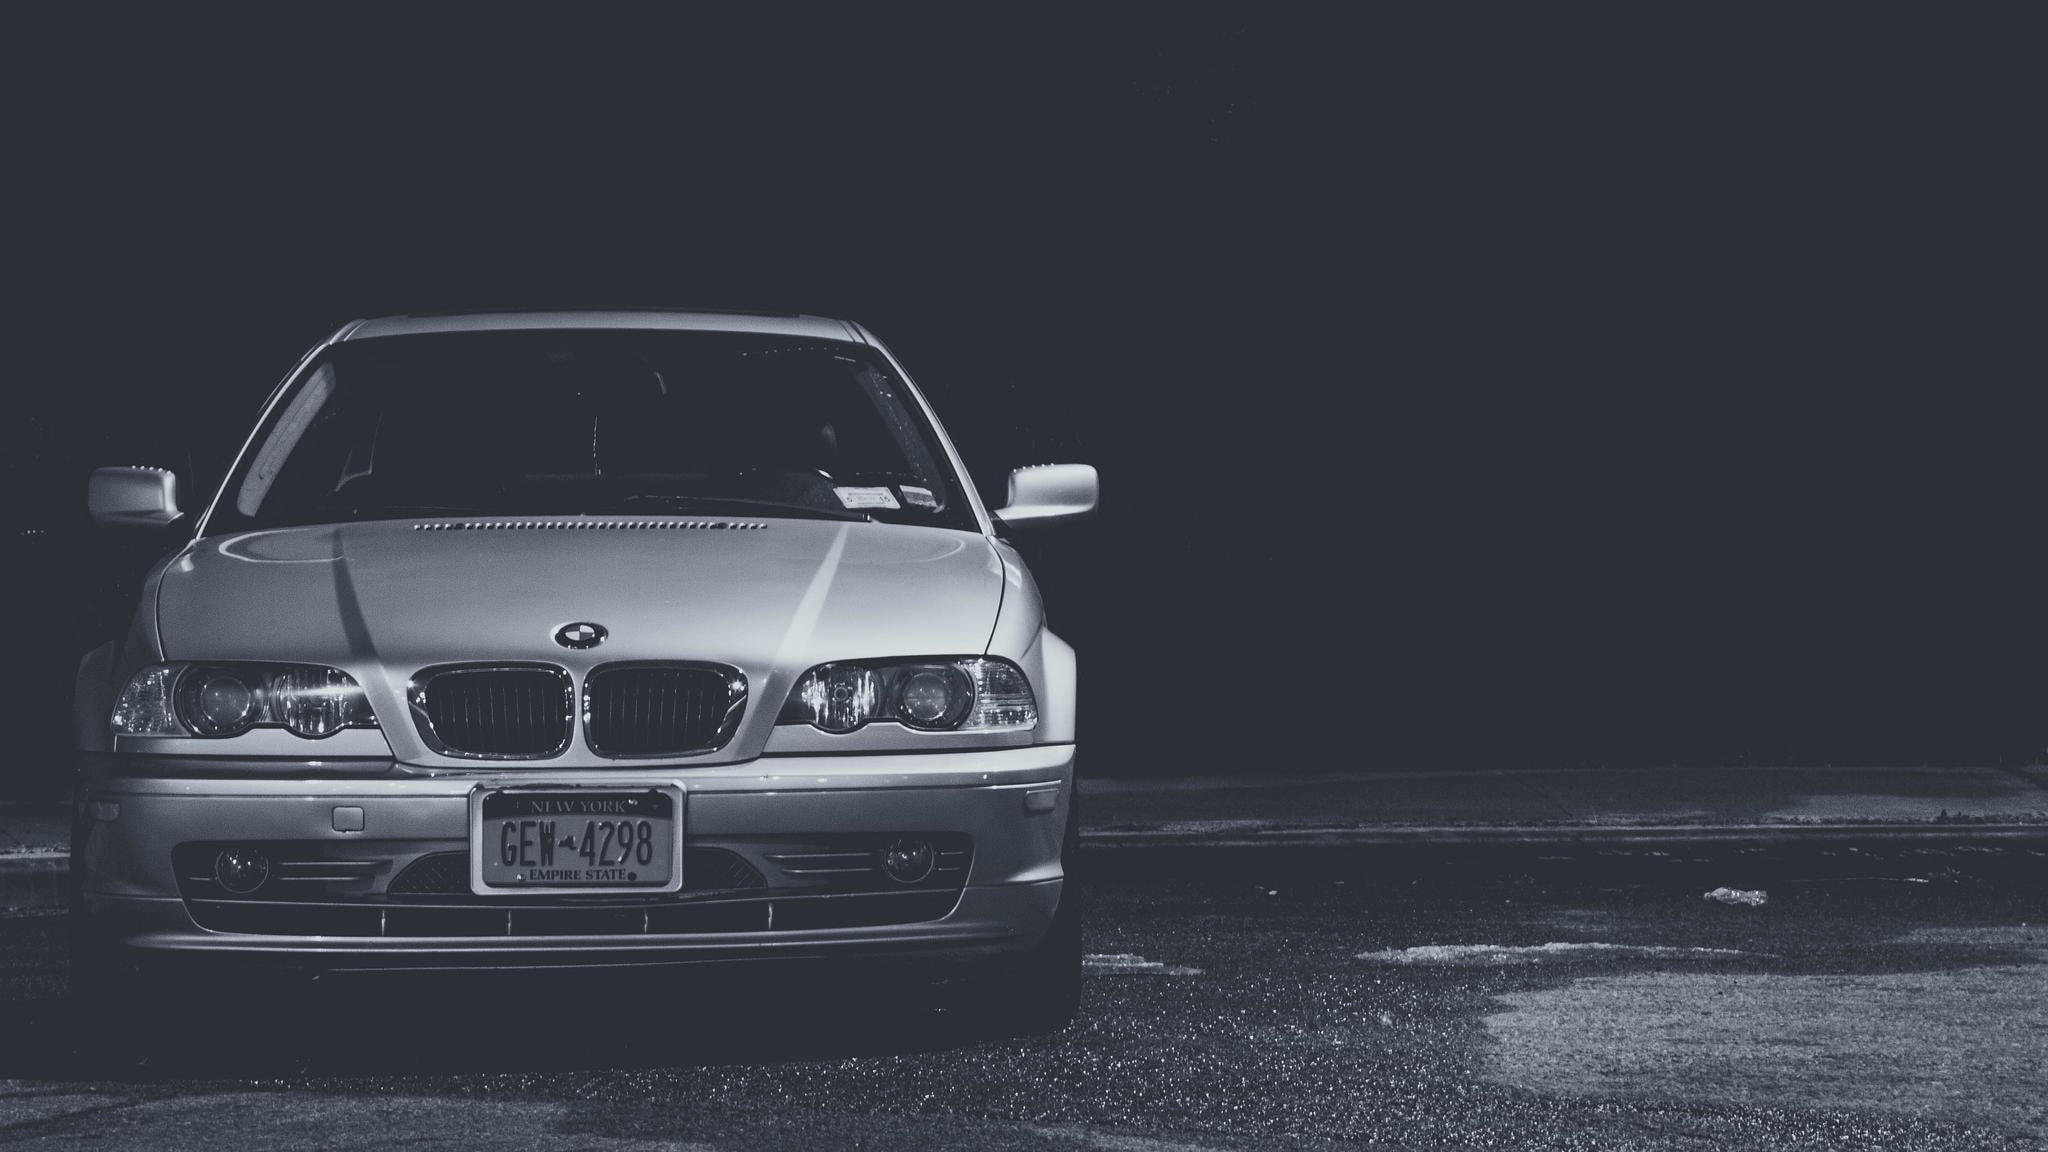 BMW, E46, silver bmw car, black-and-white